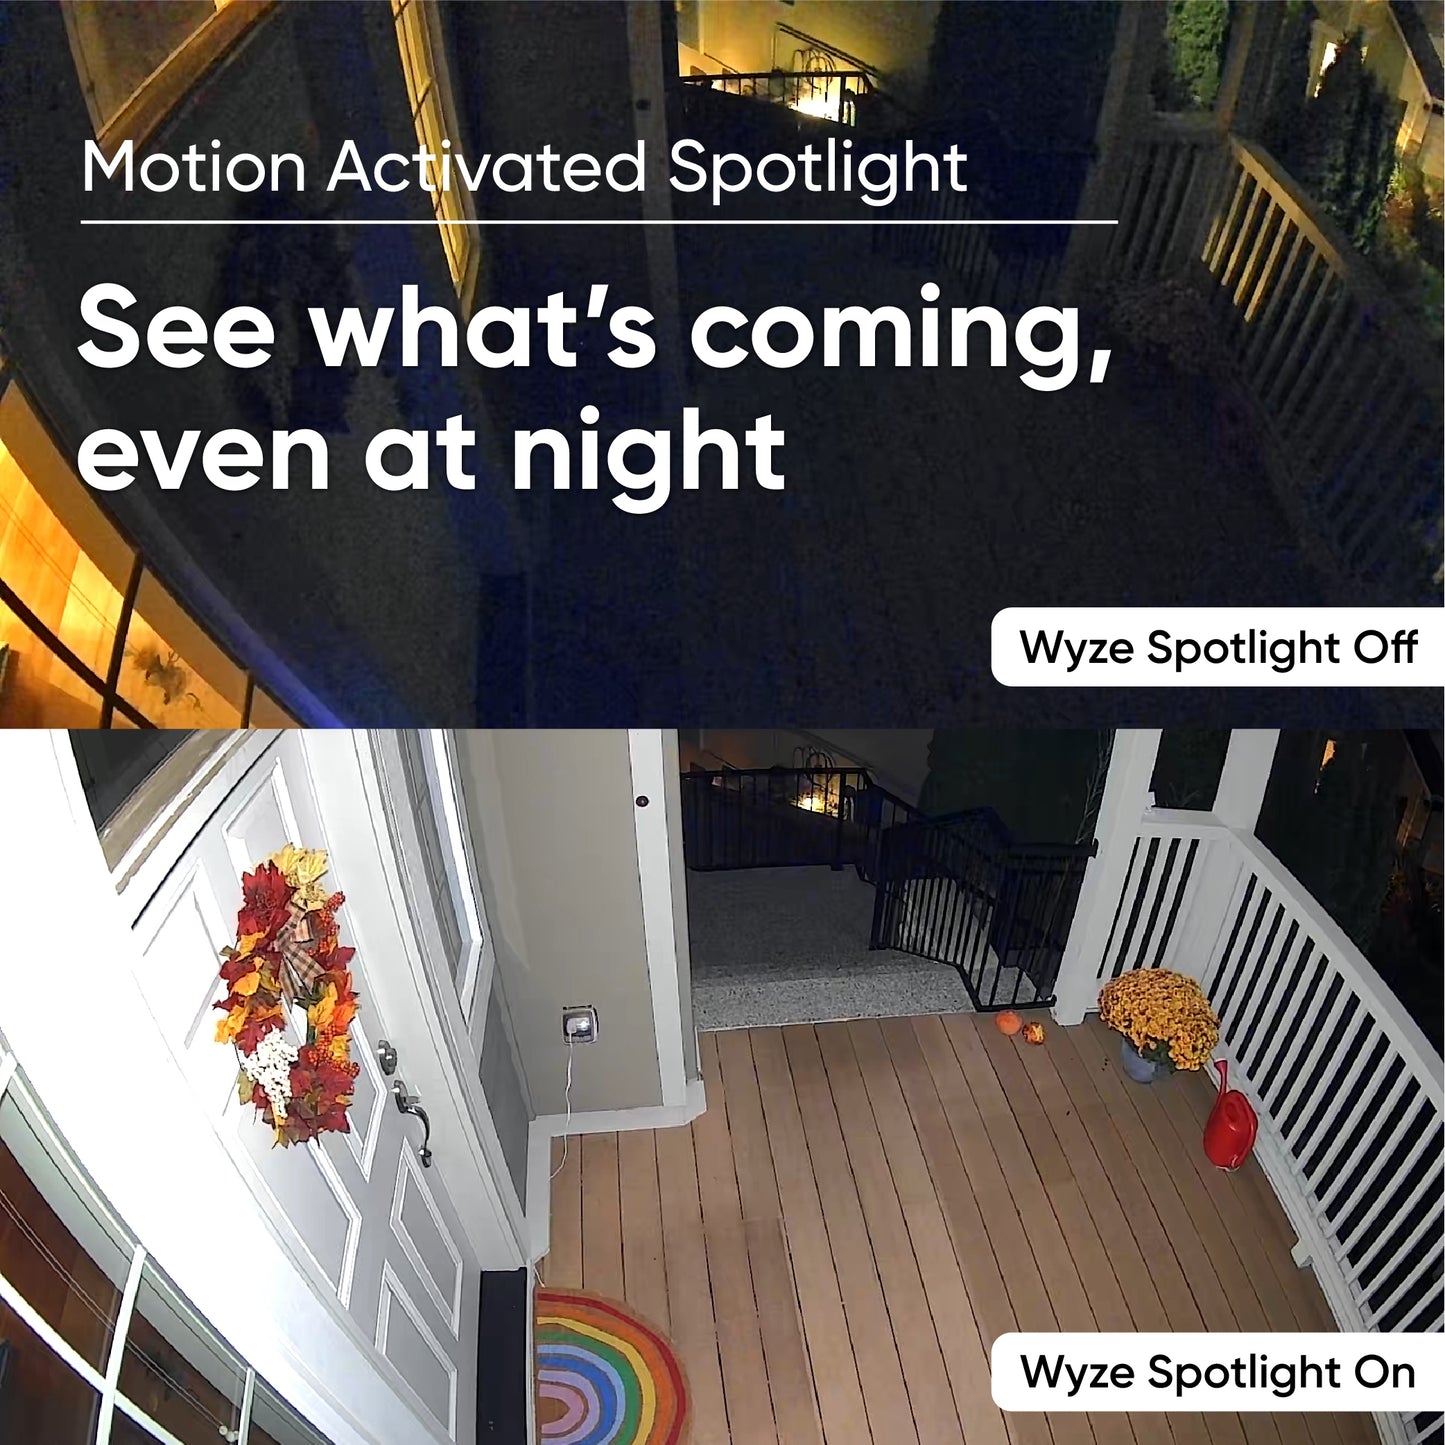 Comparison image of Wyze Spotlight off vs Spotlight on. Text overlay "Motion activated spotlight."